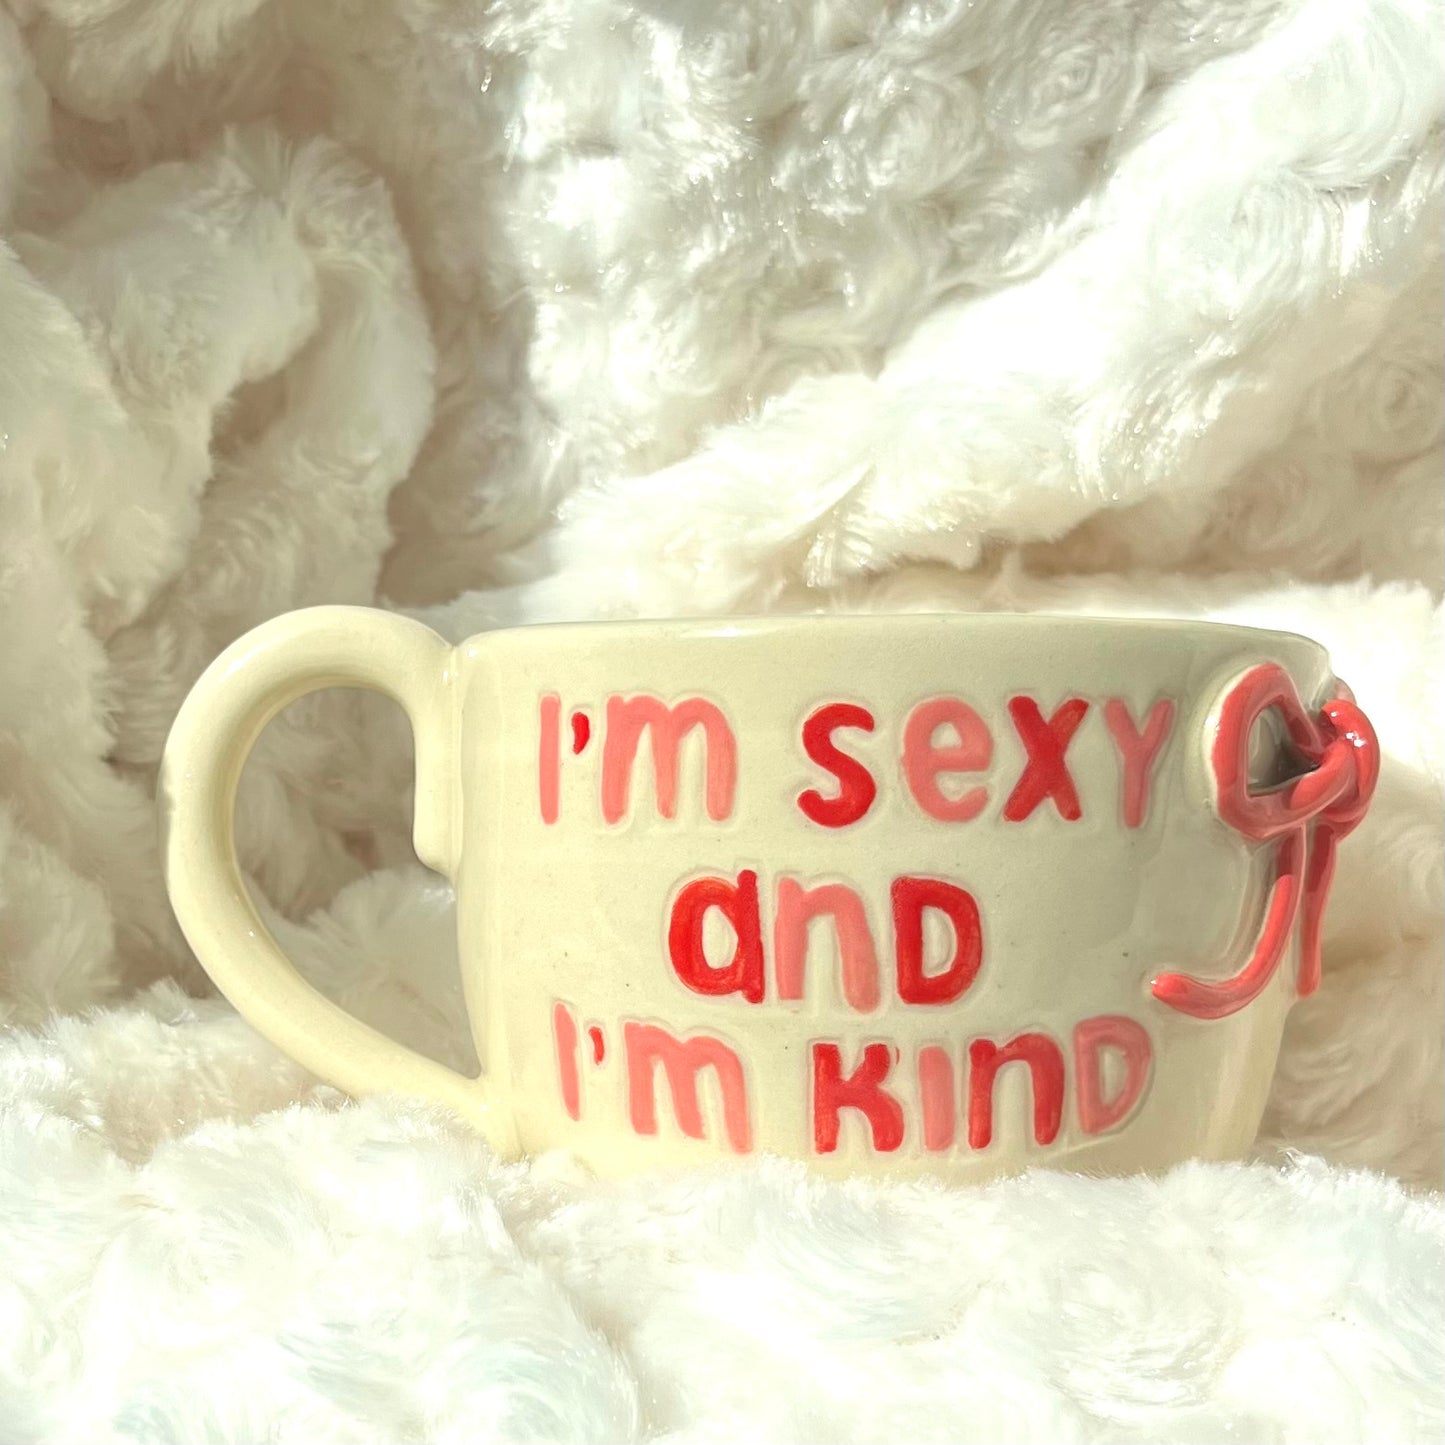 “I’m Sexy and I’m Kind” Mug